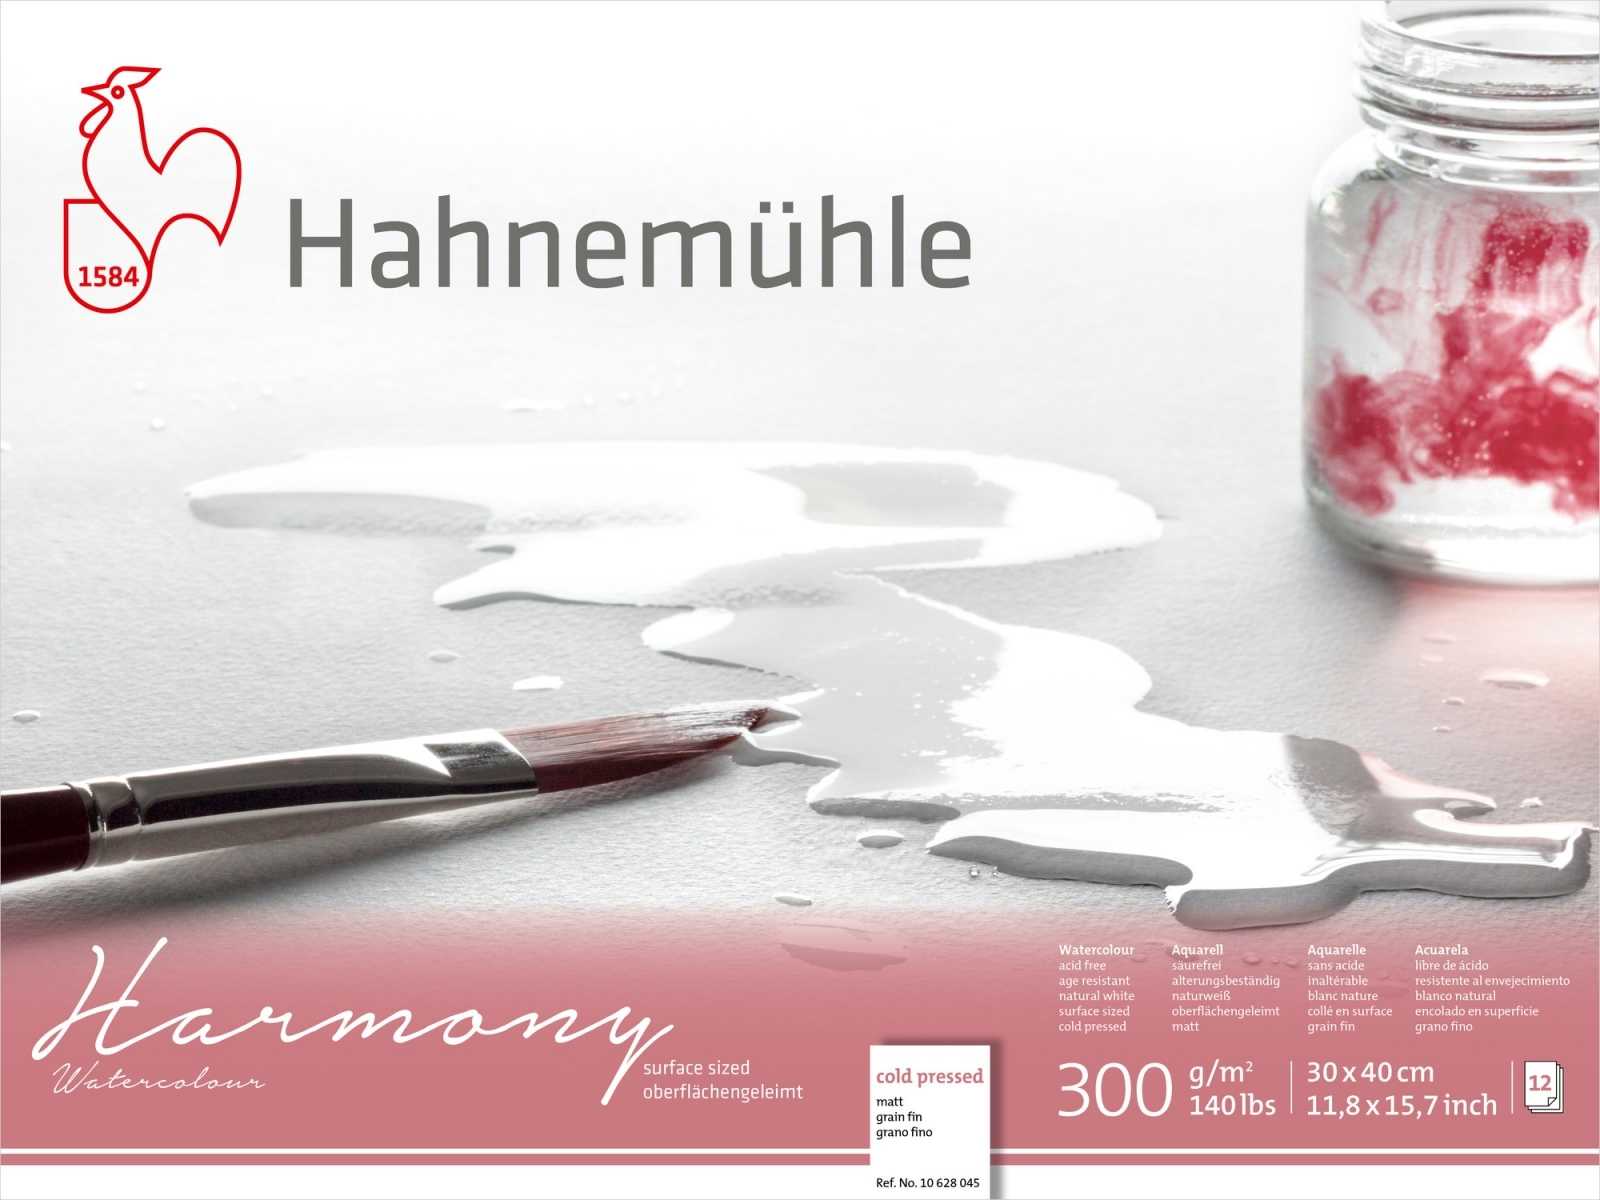 Harmony Hahnemuhle 300g Fina 30x40 12fls